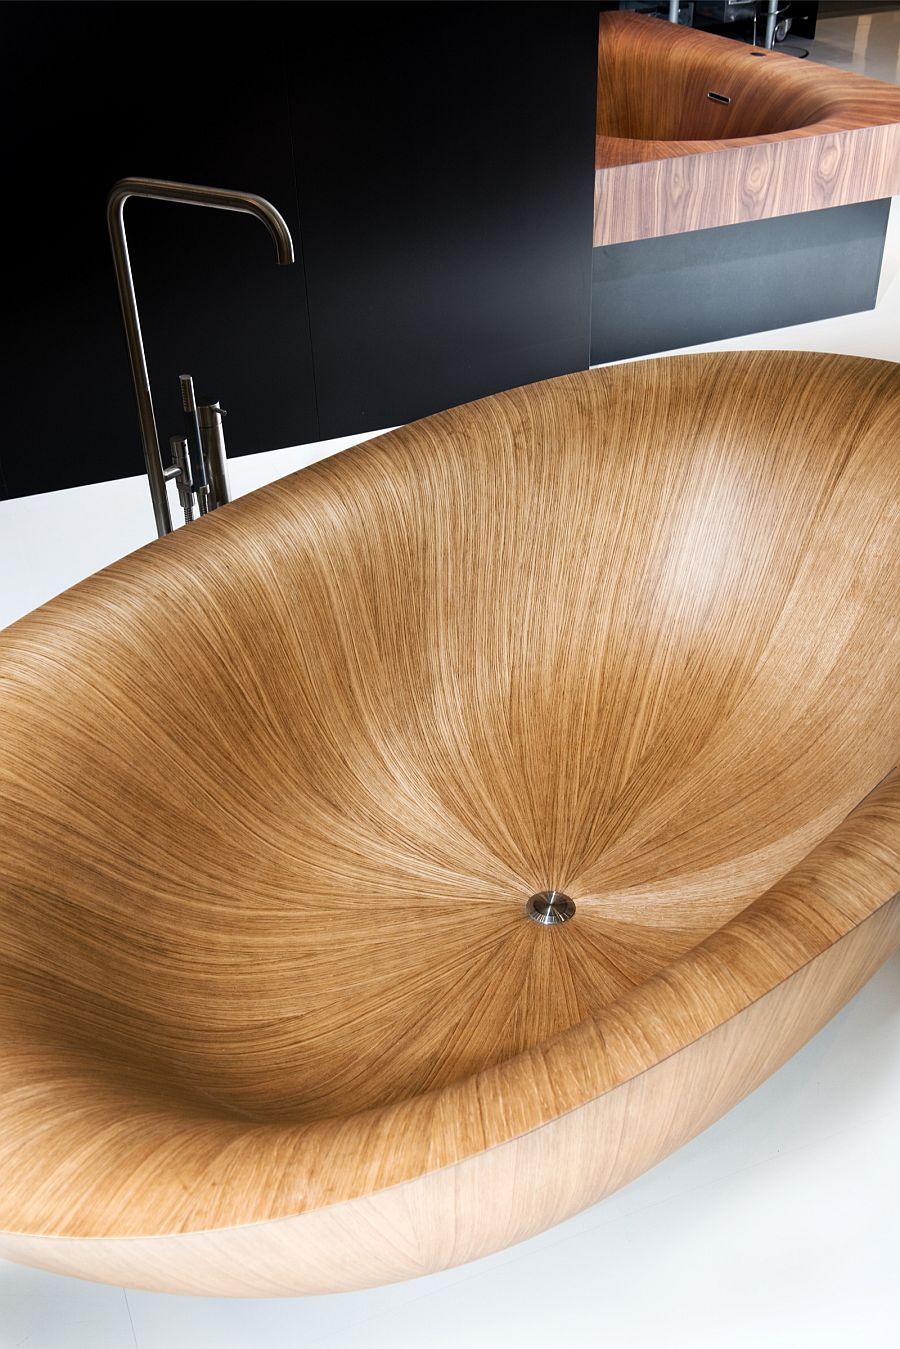 Beautifully designed wooden bathtub